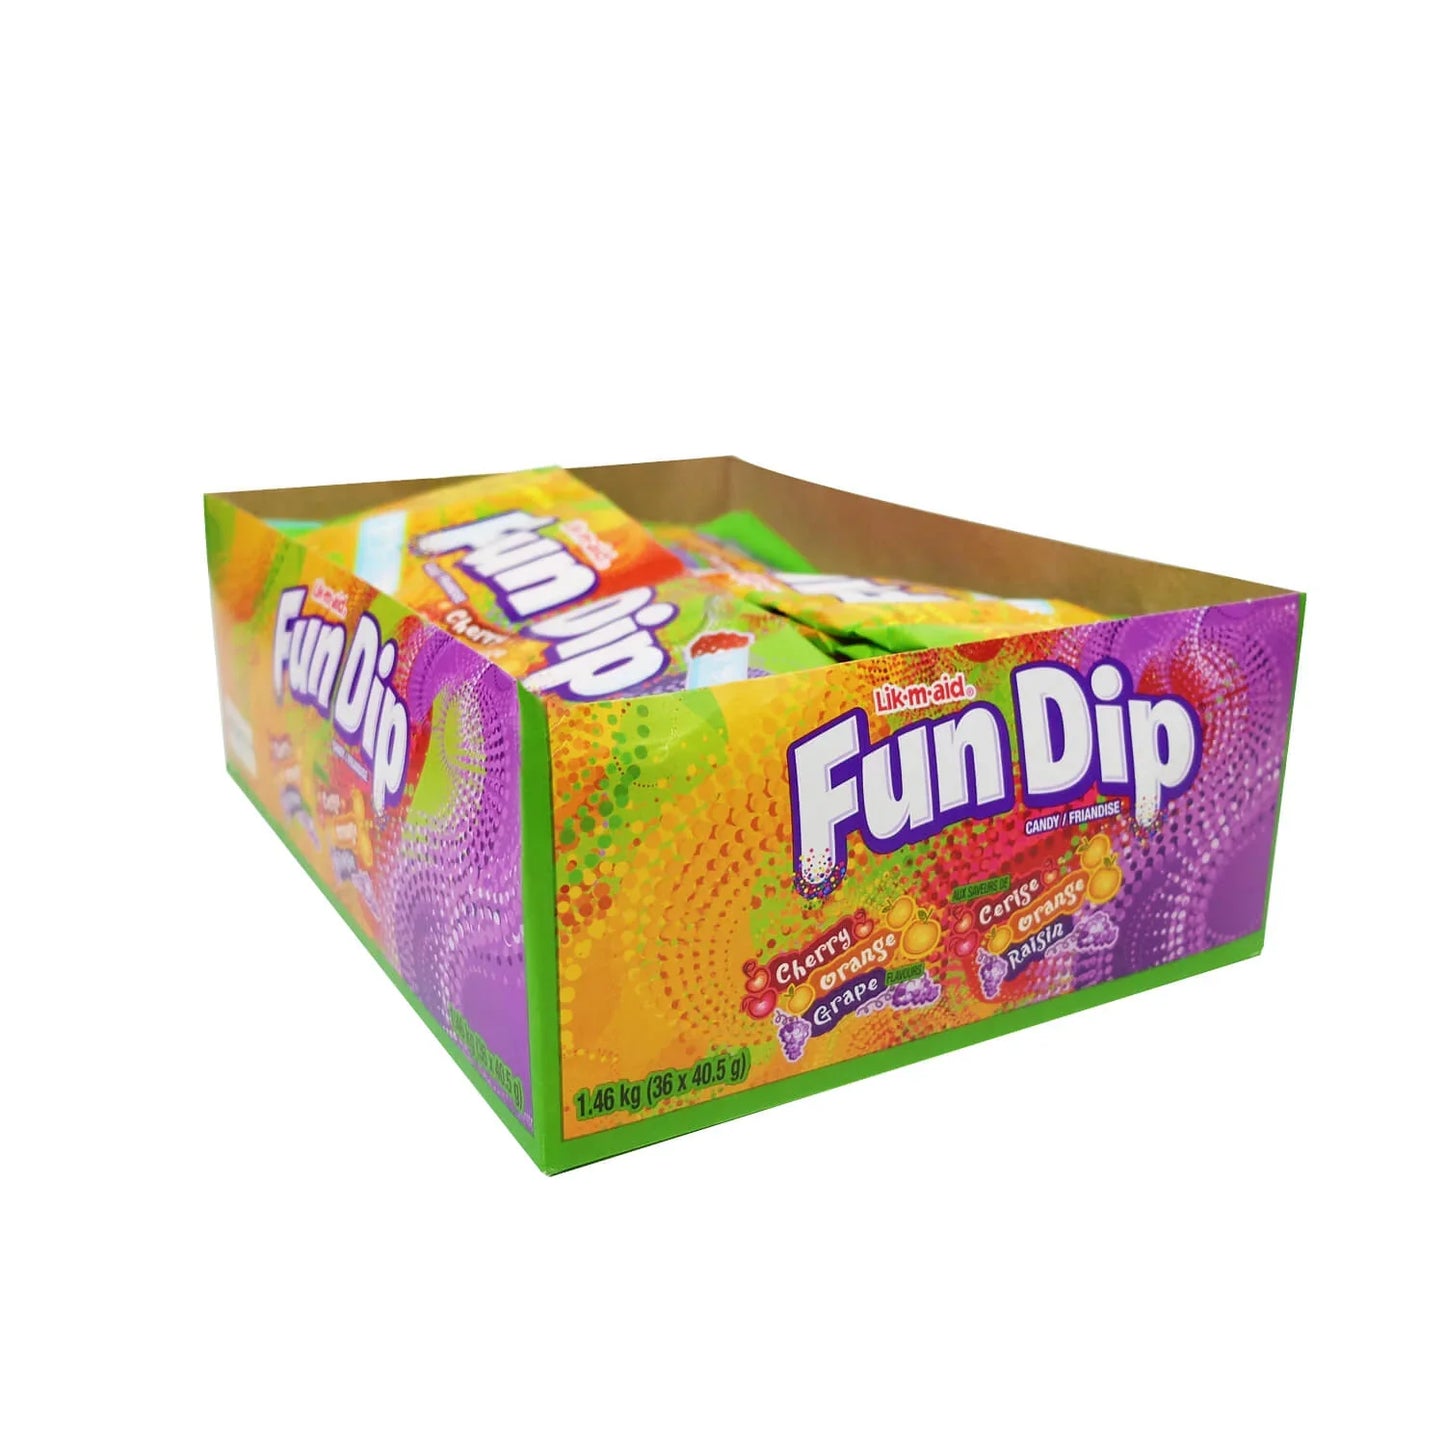 Lik M Aid Fun Dip Candy 40.5g (Case of 36)